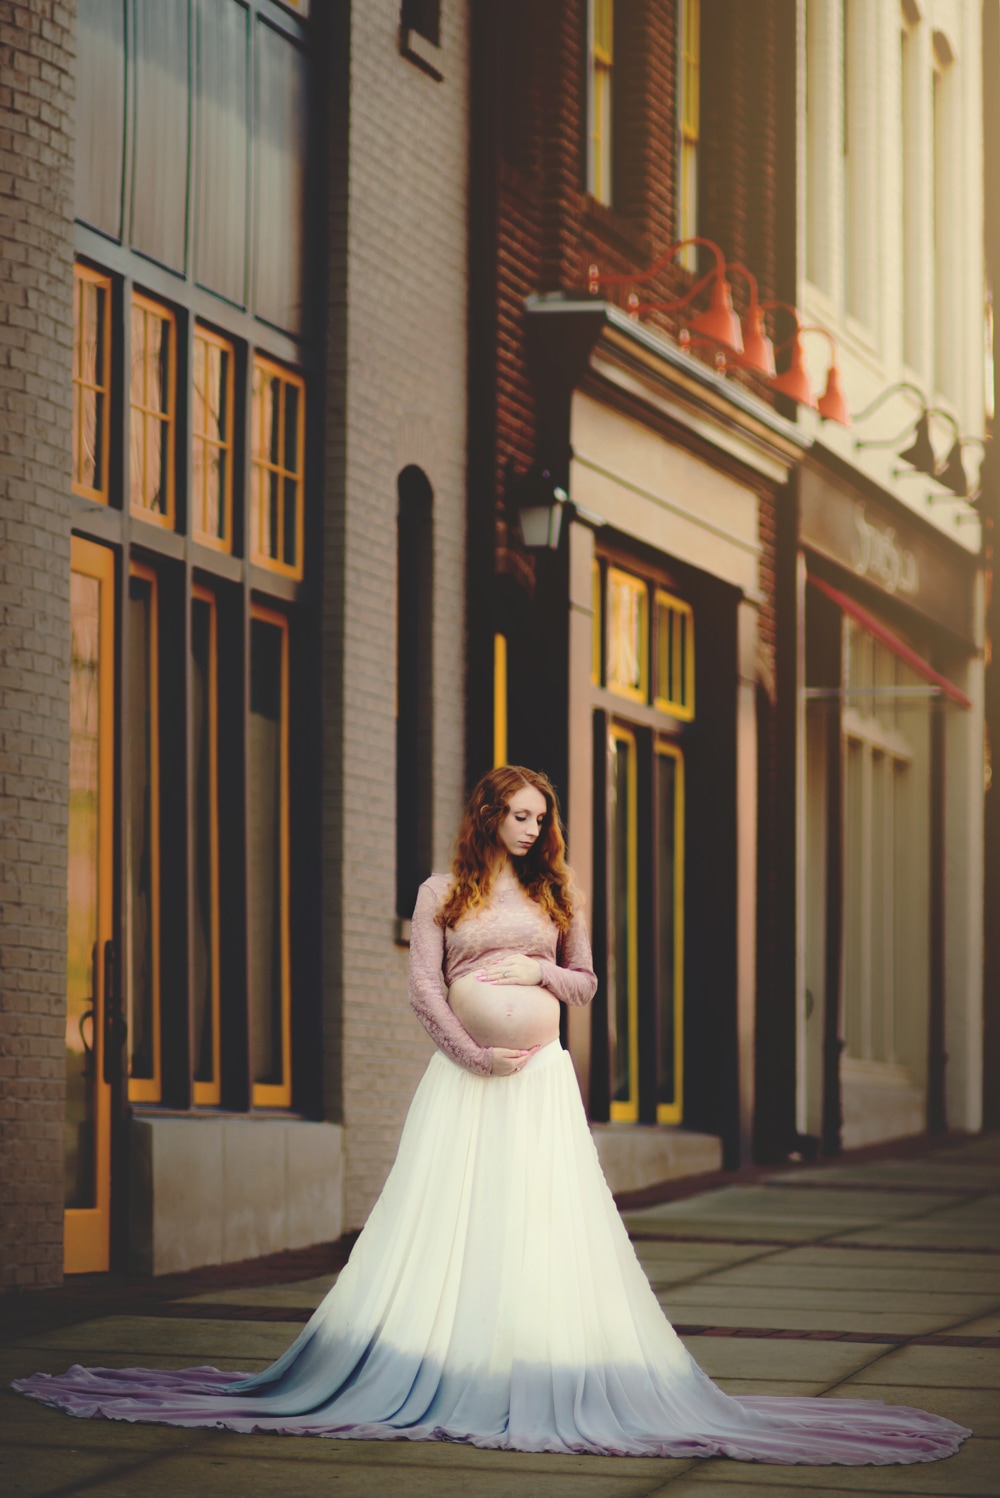 Douglasville, Georgia Maternity Photographer | Maternity Photography in Atlanta, GA